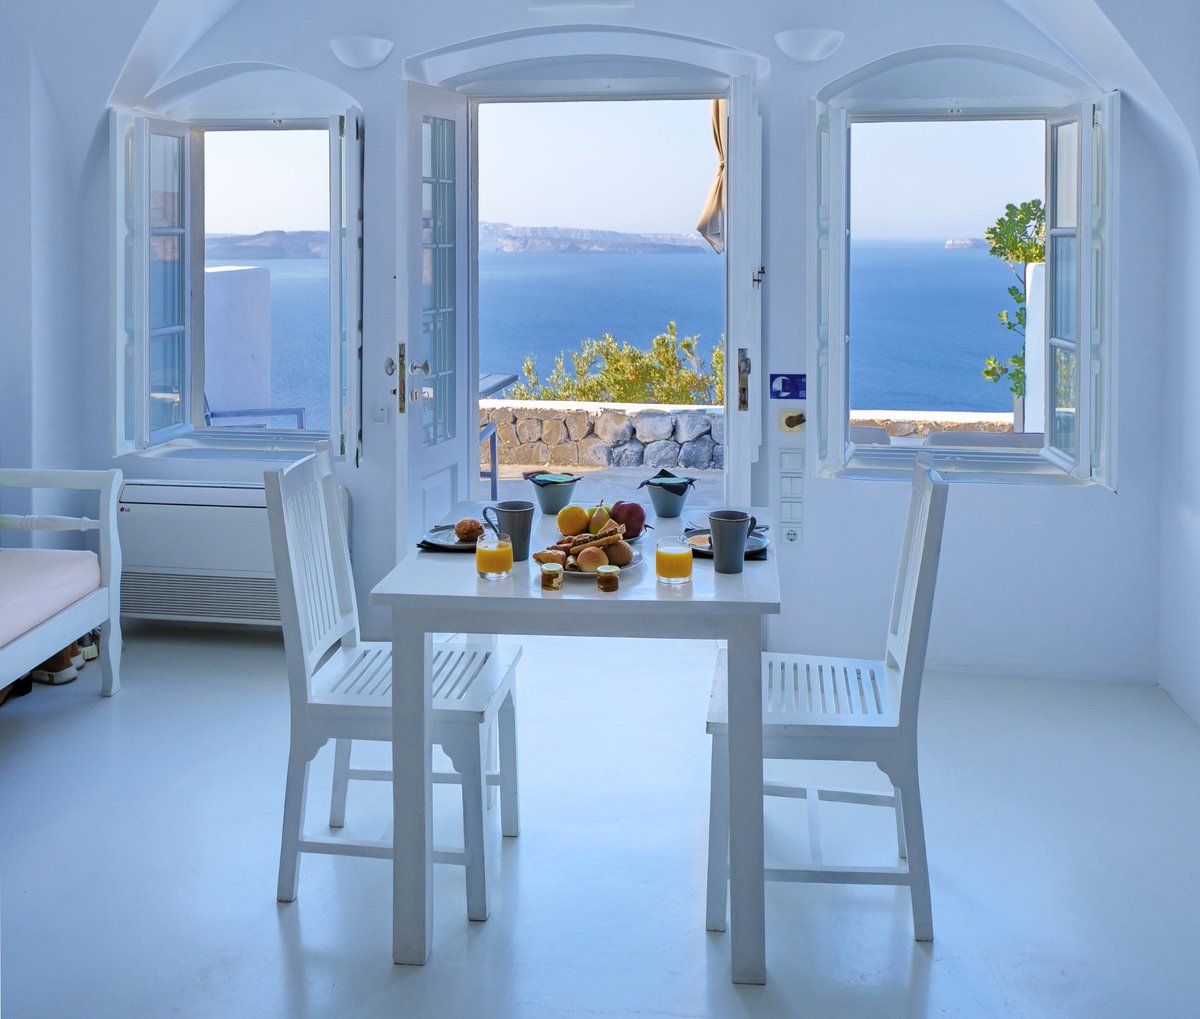 Create your own unforgettable summer story in Crete!

🔹 goforvilla.com
.
.
 #goforvilla #vacationincrete #summergetaways #dreamvacation #seaviewvilla #escapetoparadise #relaxingholiday #uniqueexperience #unwind #greecegetaway